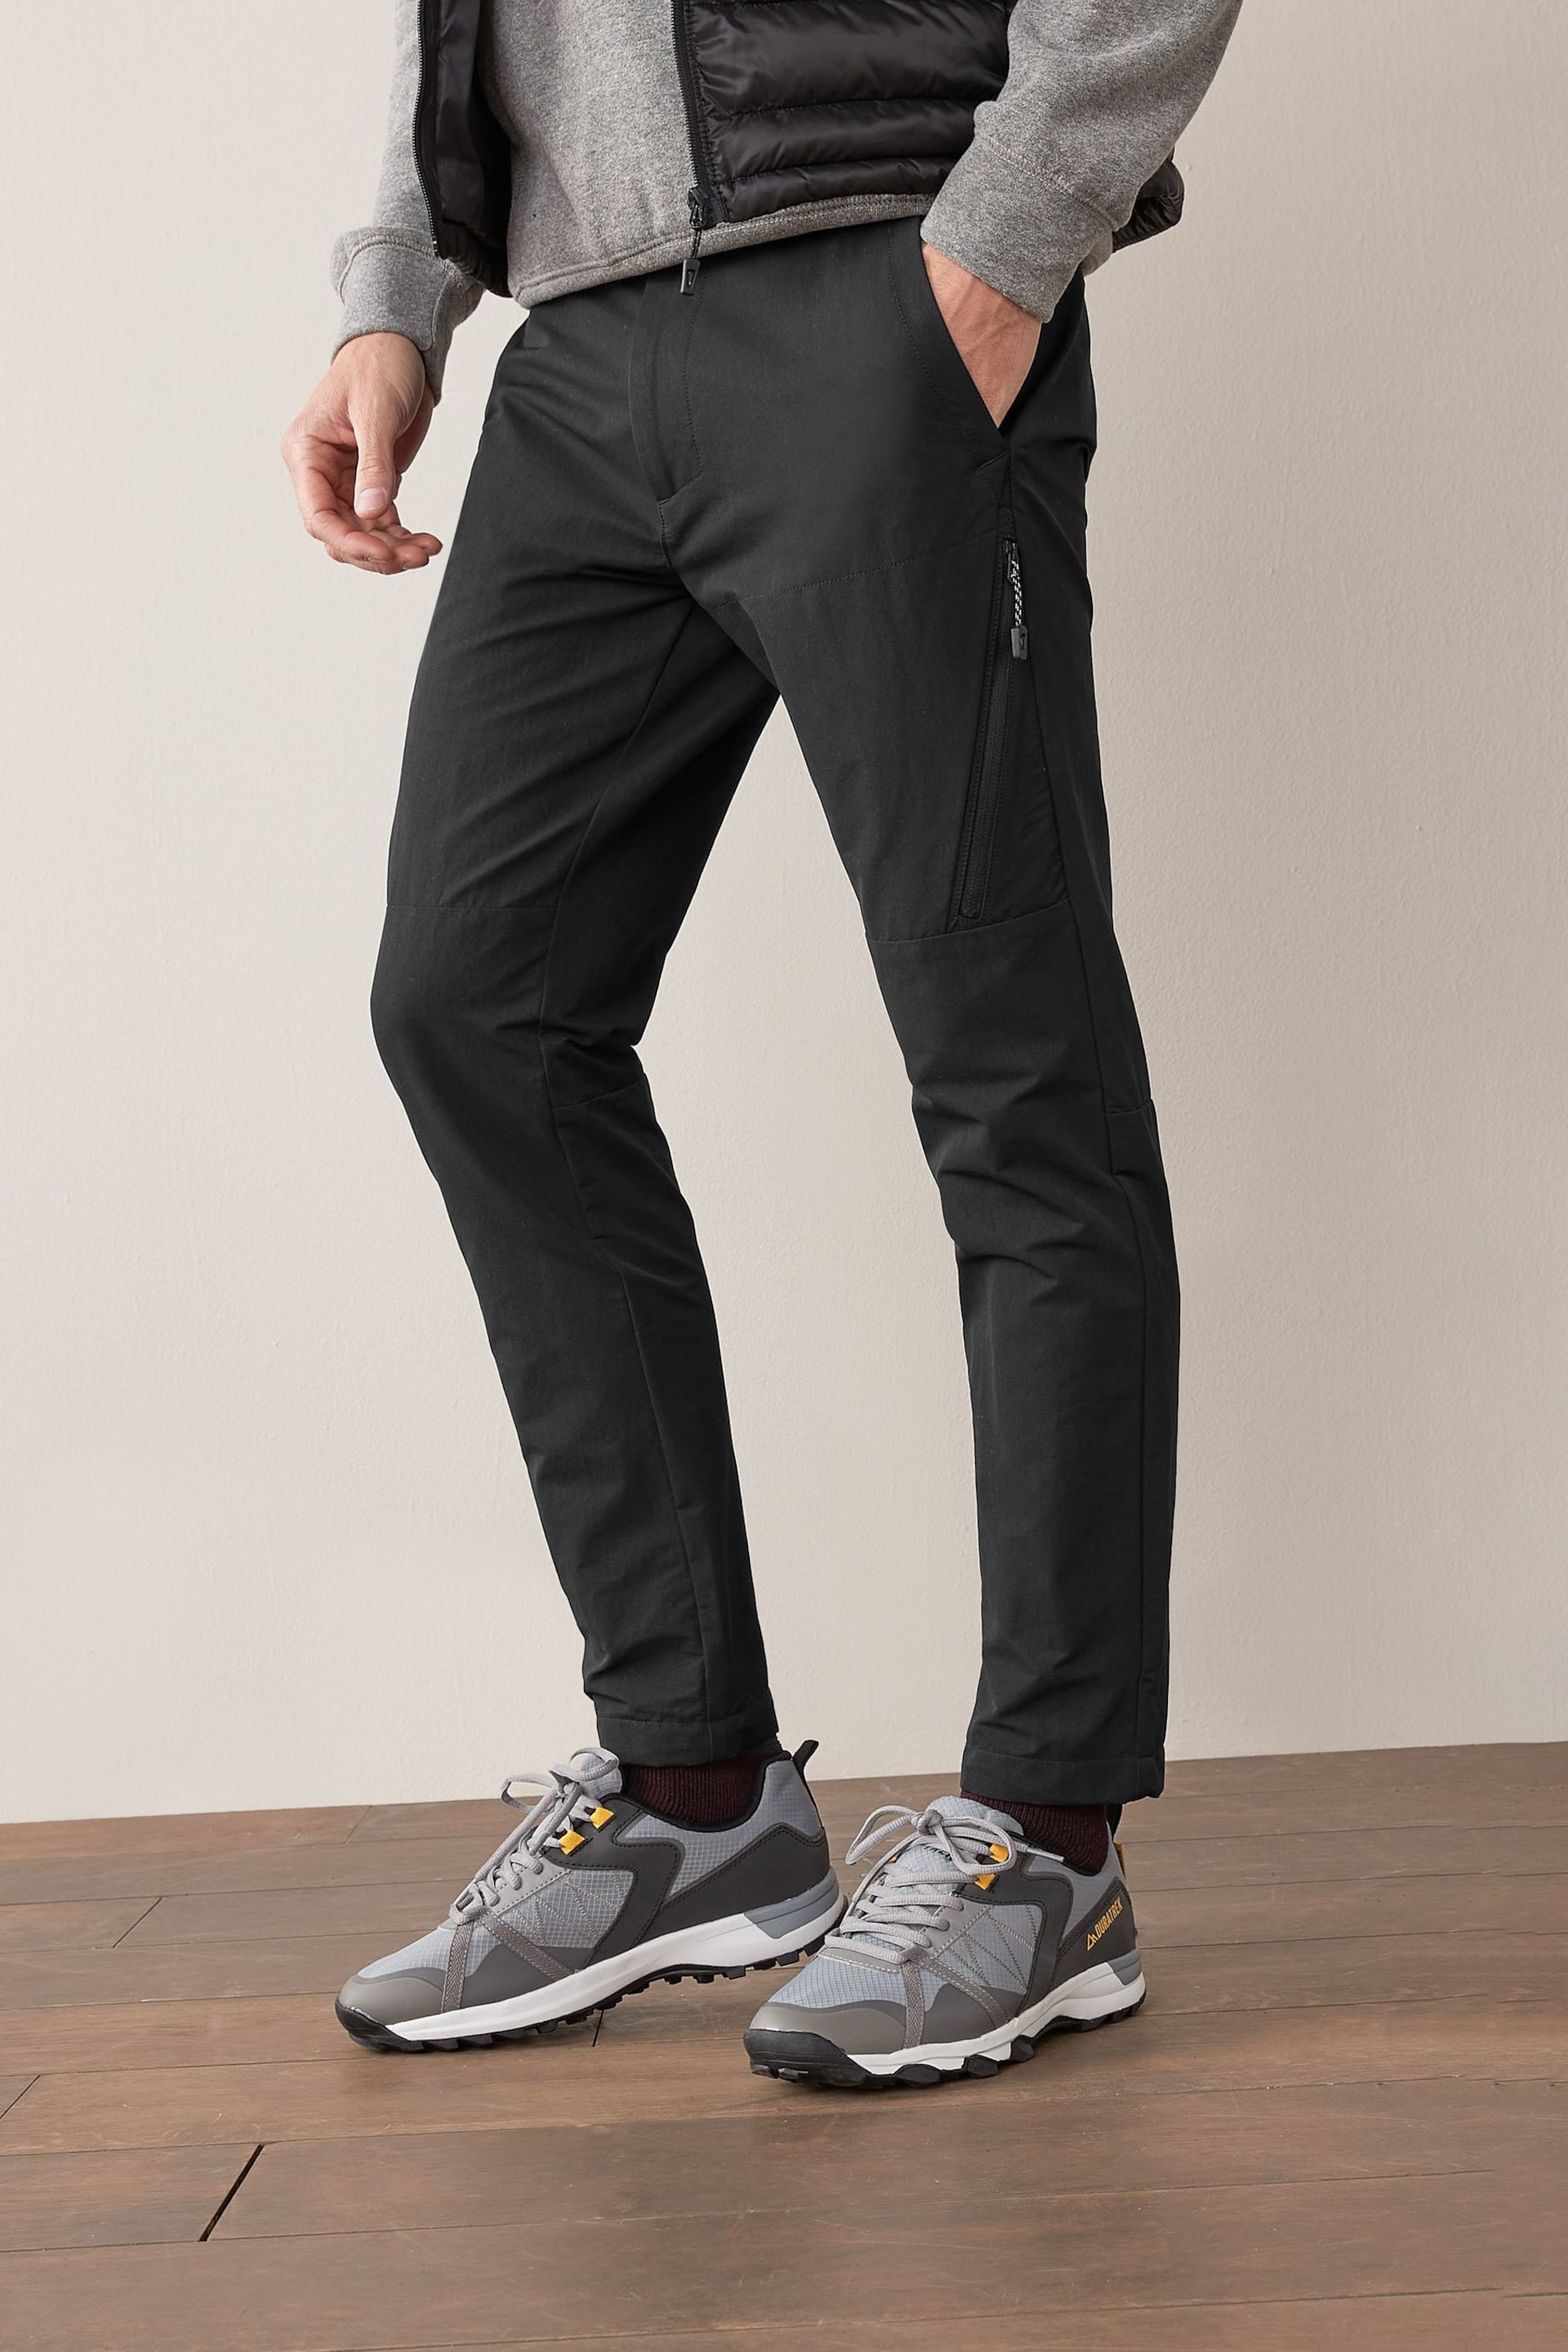 Black Slim Shower Resistant Walking Trousers - Image 1 of 5